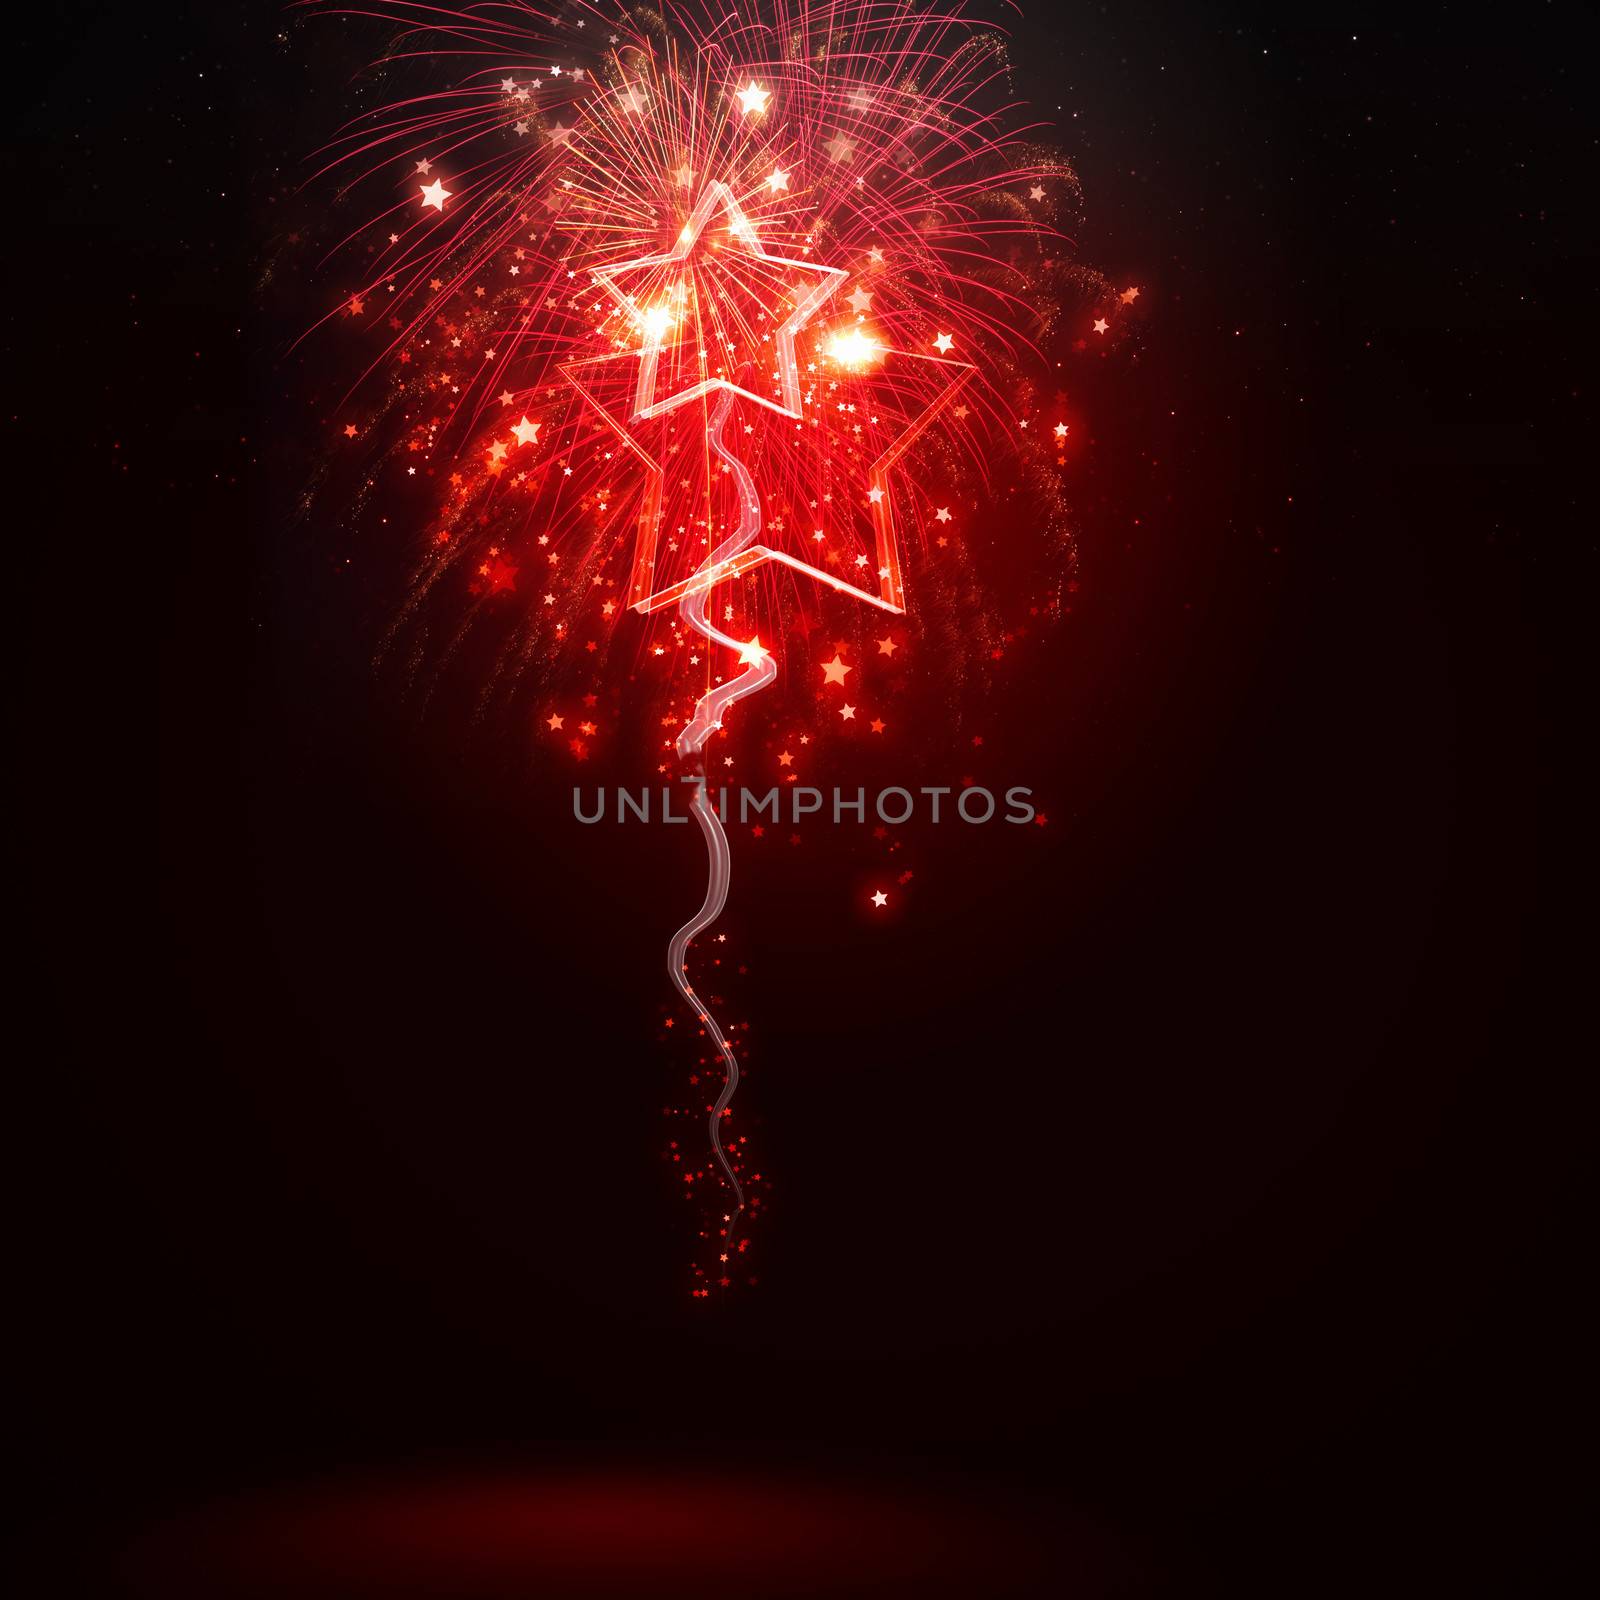 Fireworks by sergey_nivens